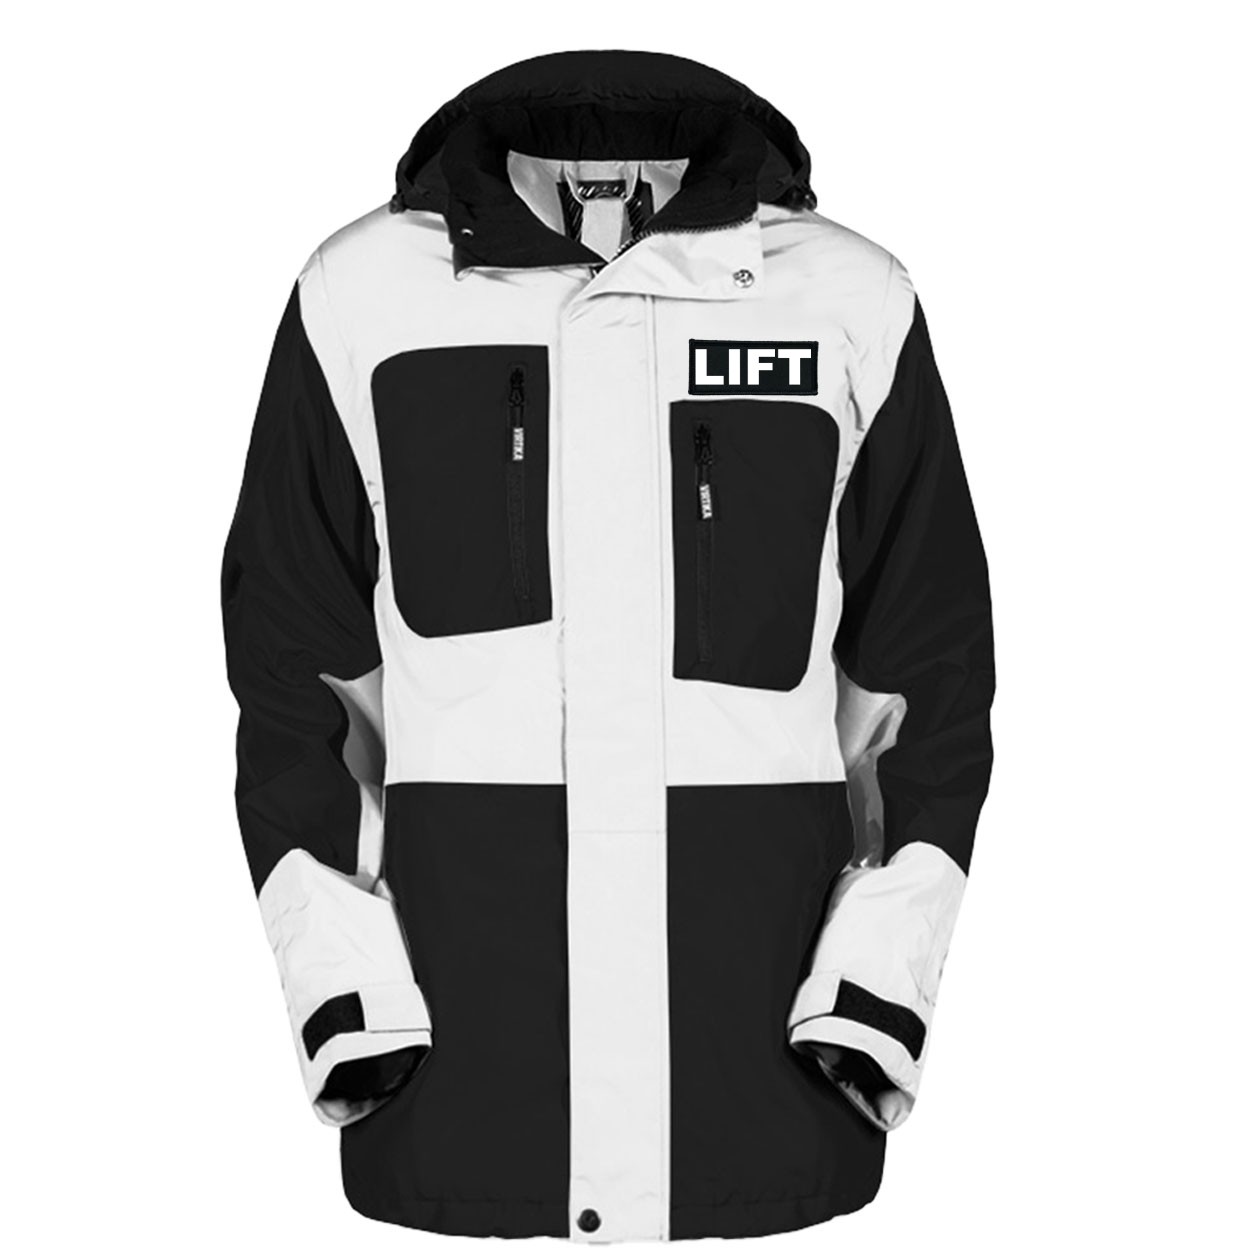 Lift Brand Logo Pro Waterproof Breathable Winter Virtika Jacket Black/White (White Logo)